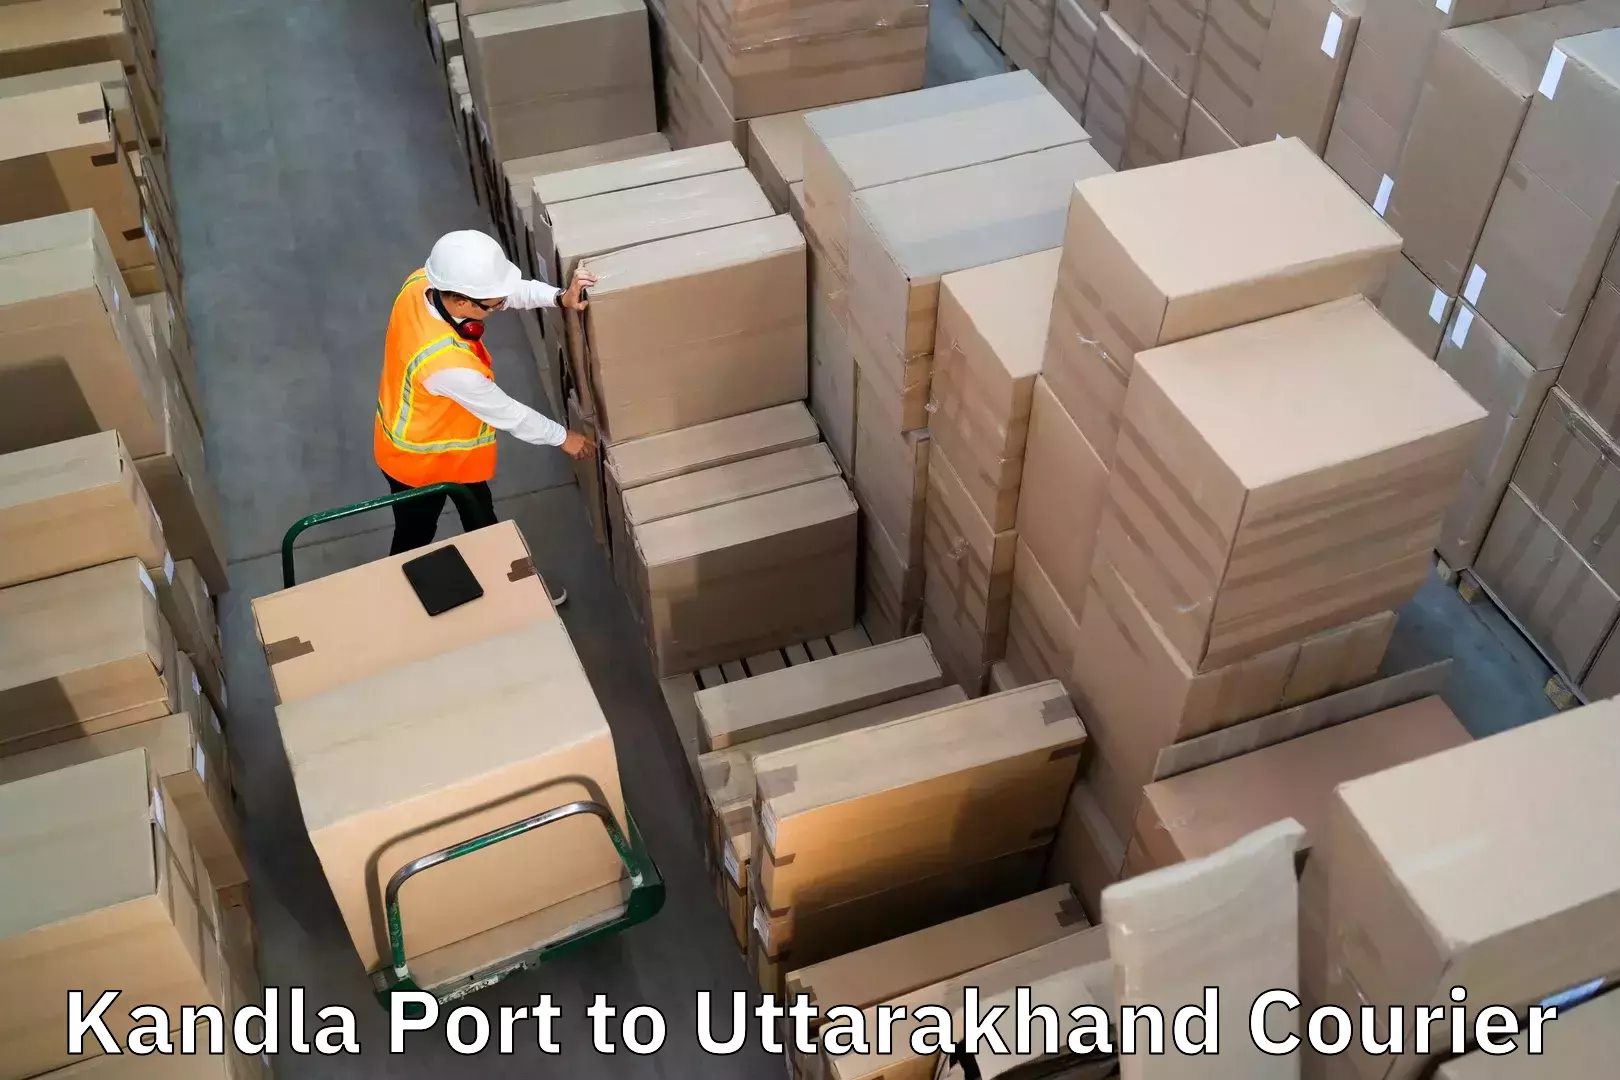 Luggage dispatch service Kandla Port to Dehradun